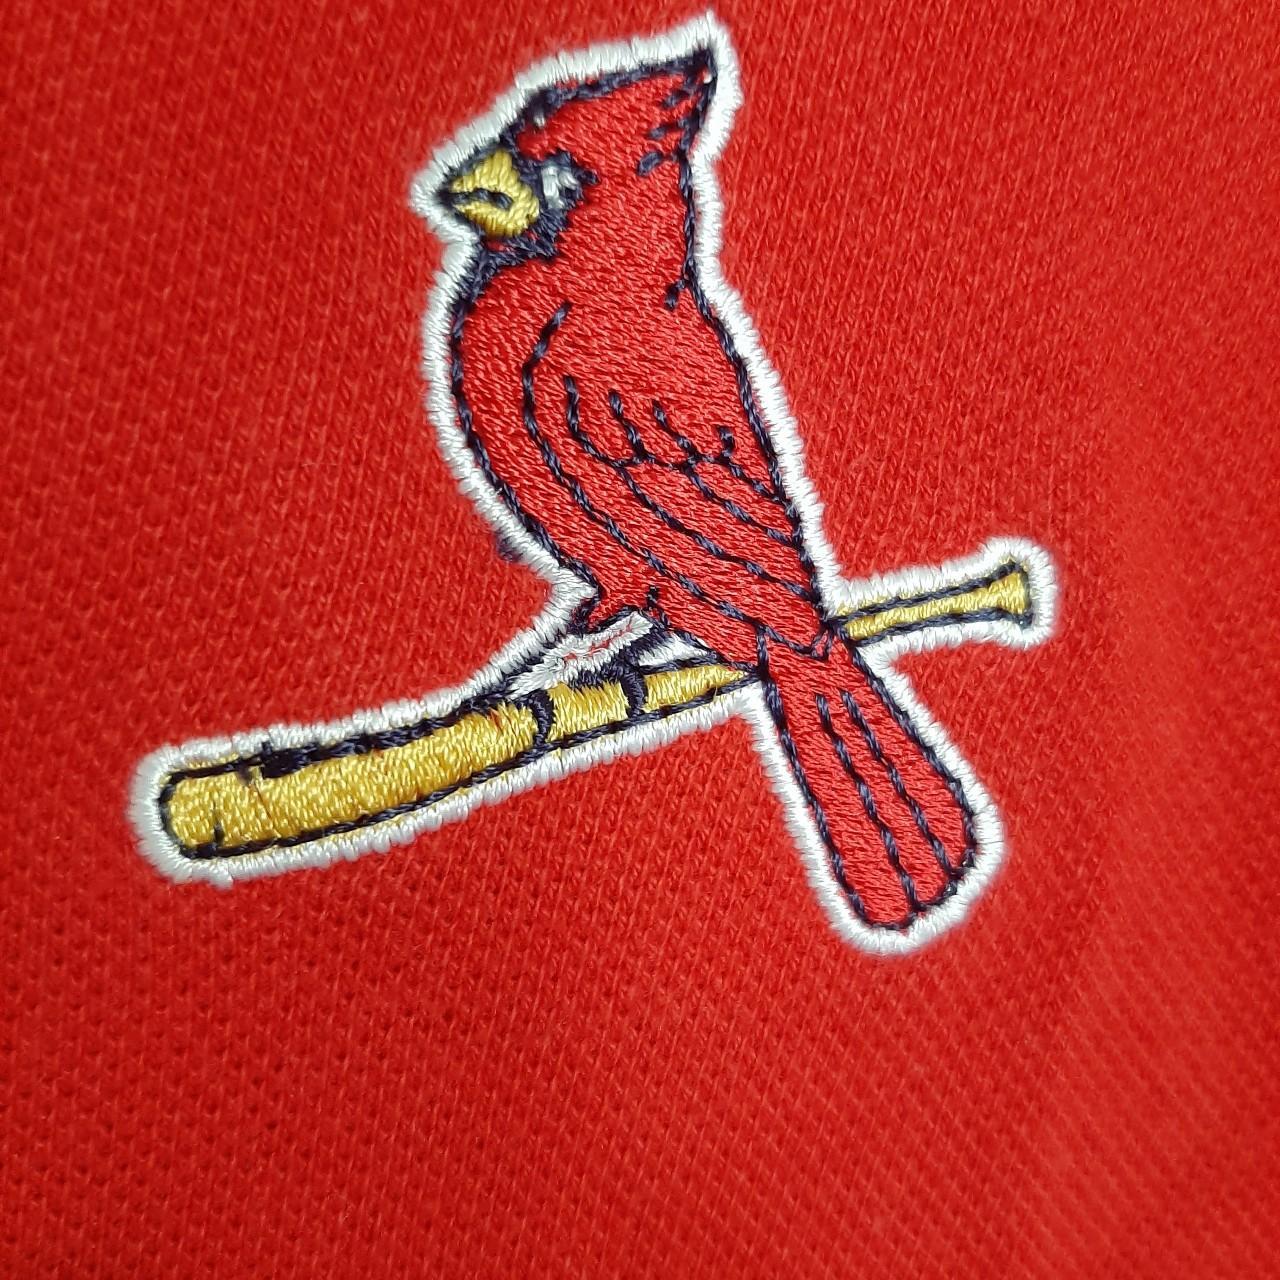 Stitch's, Shirts, St Louis Cardinals Polo